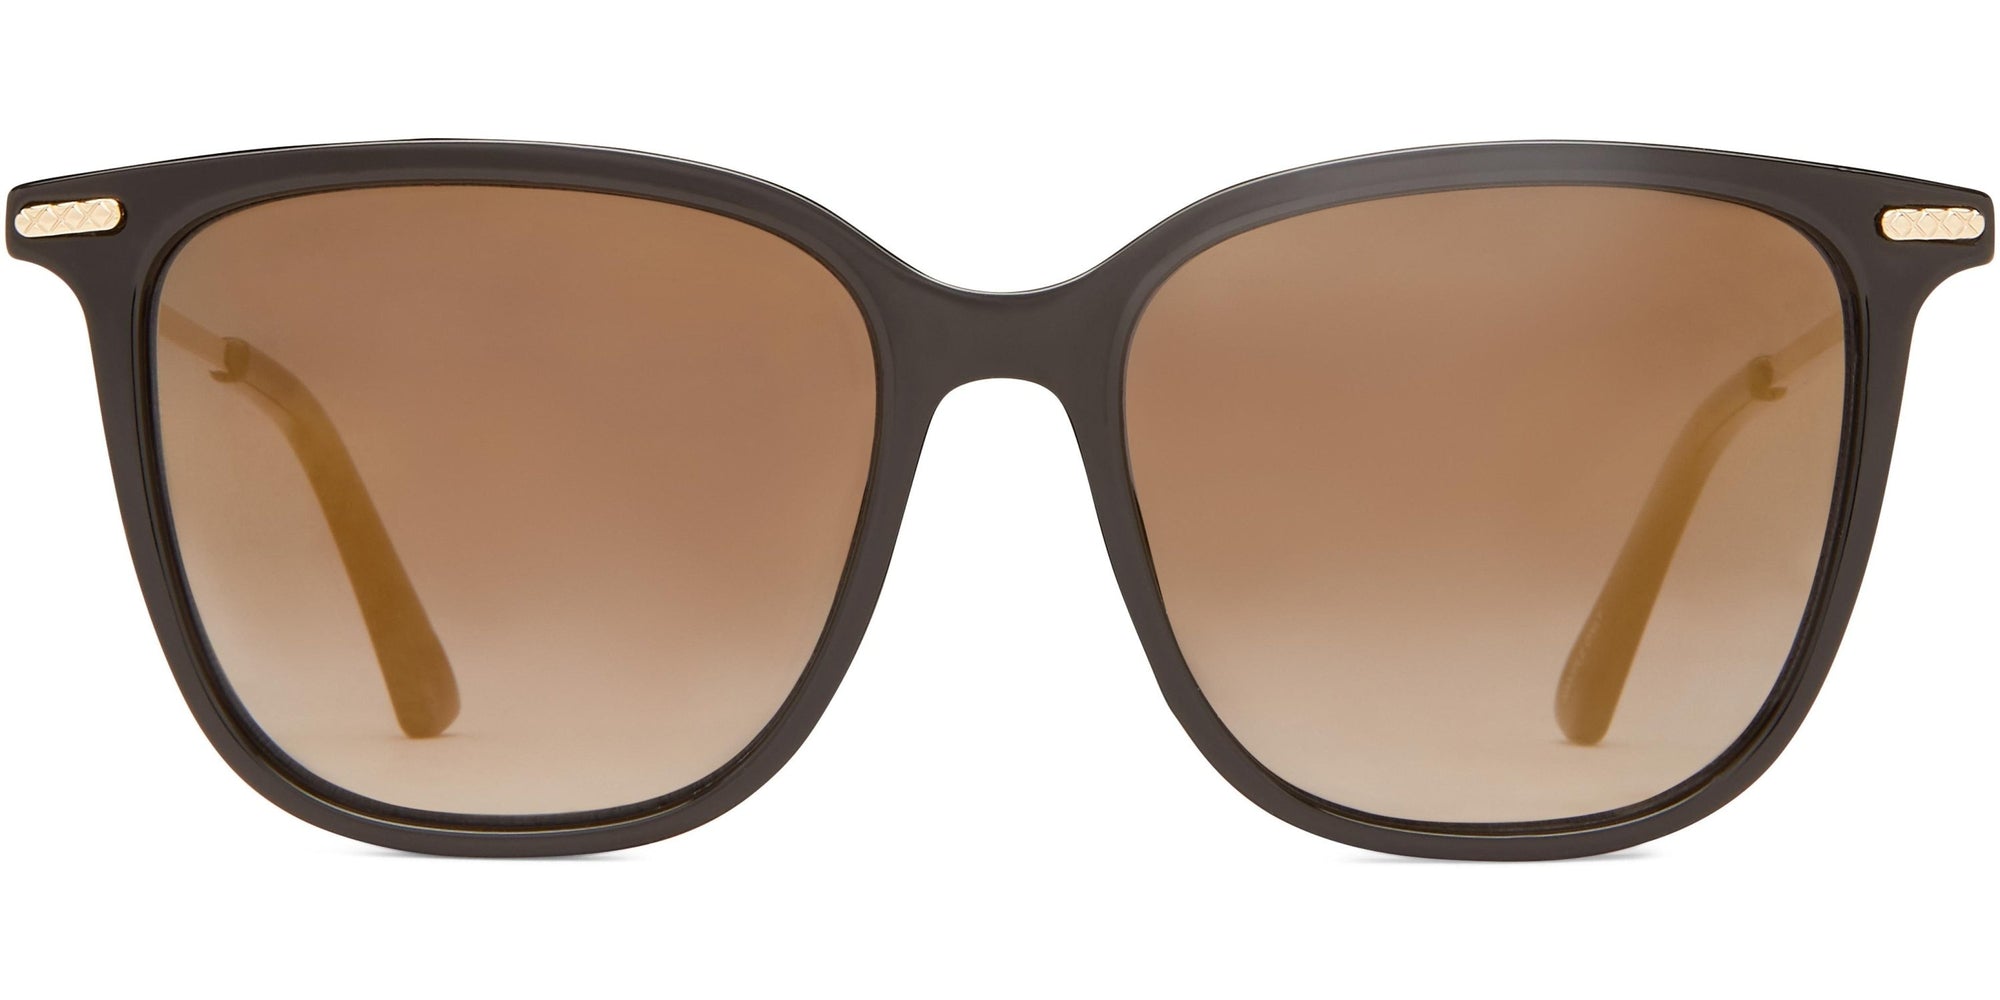 Mia - Black/Gold Metal/Brown Lens - Sunglasses